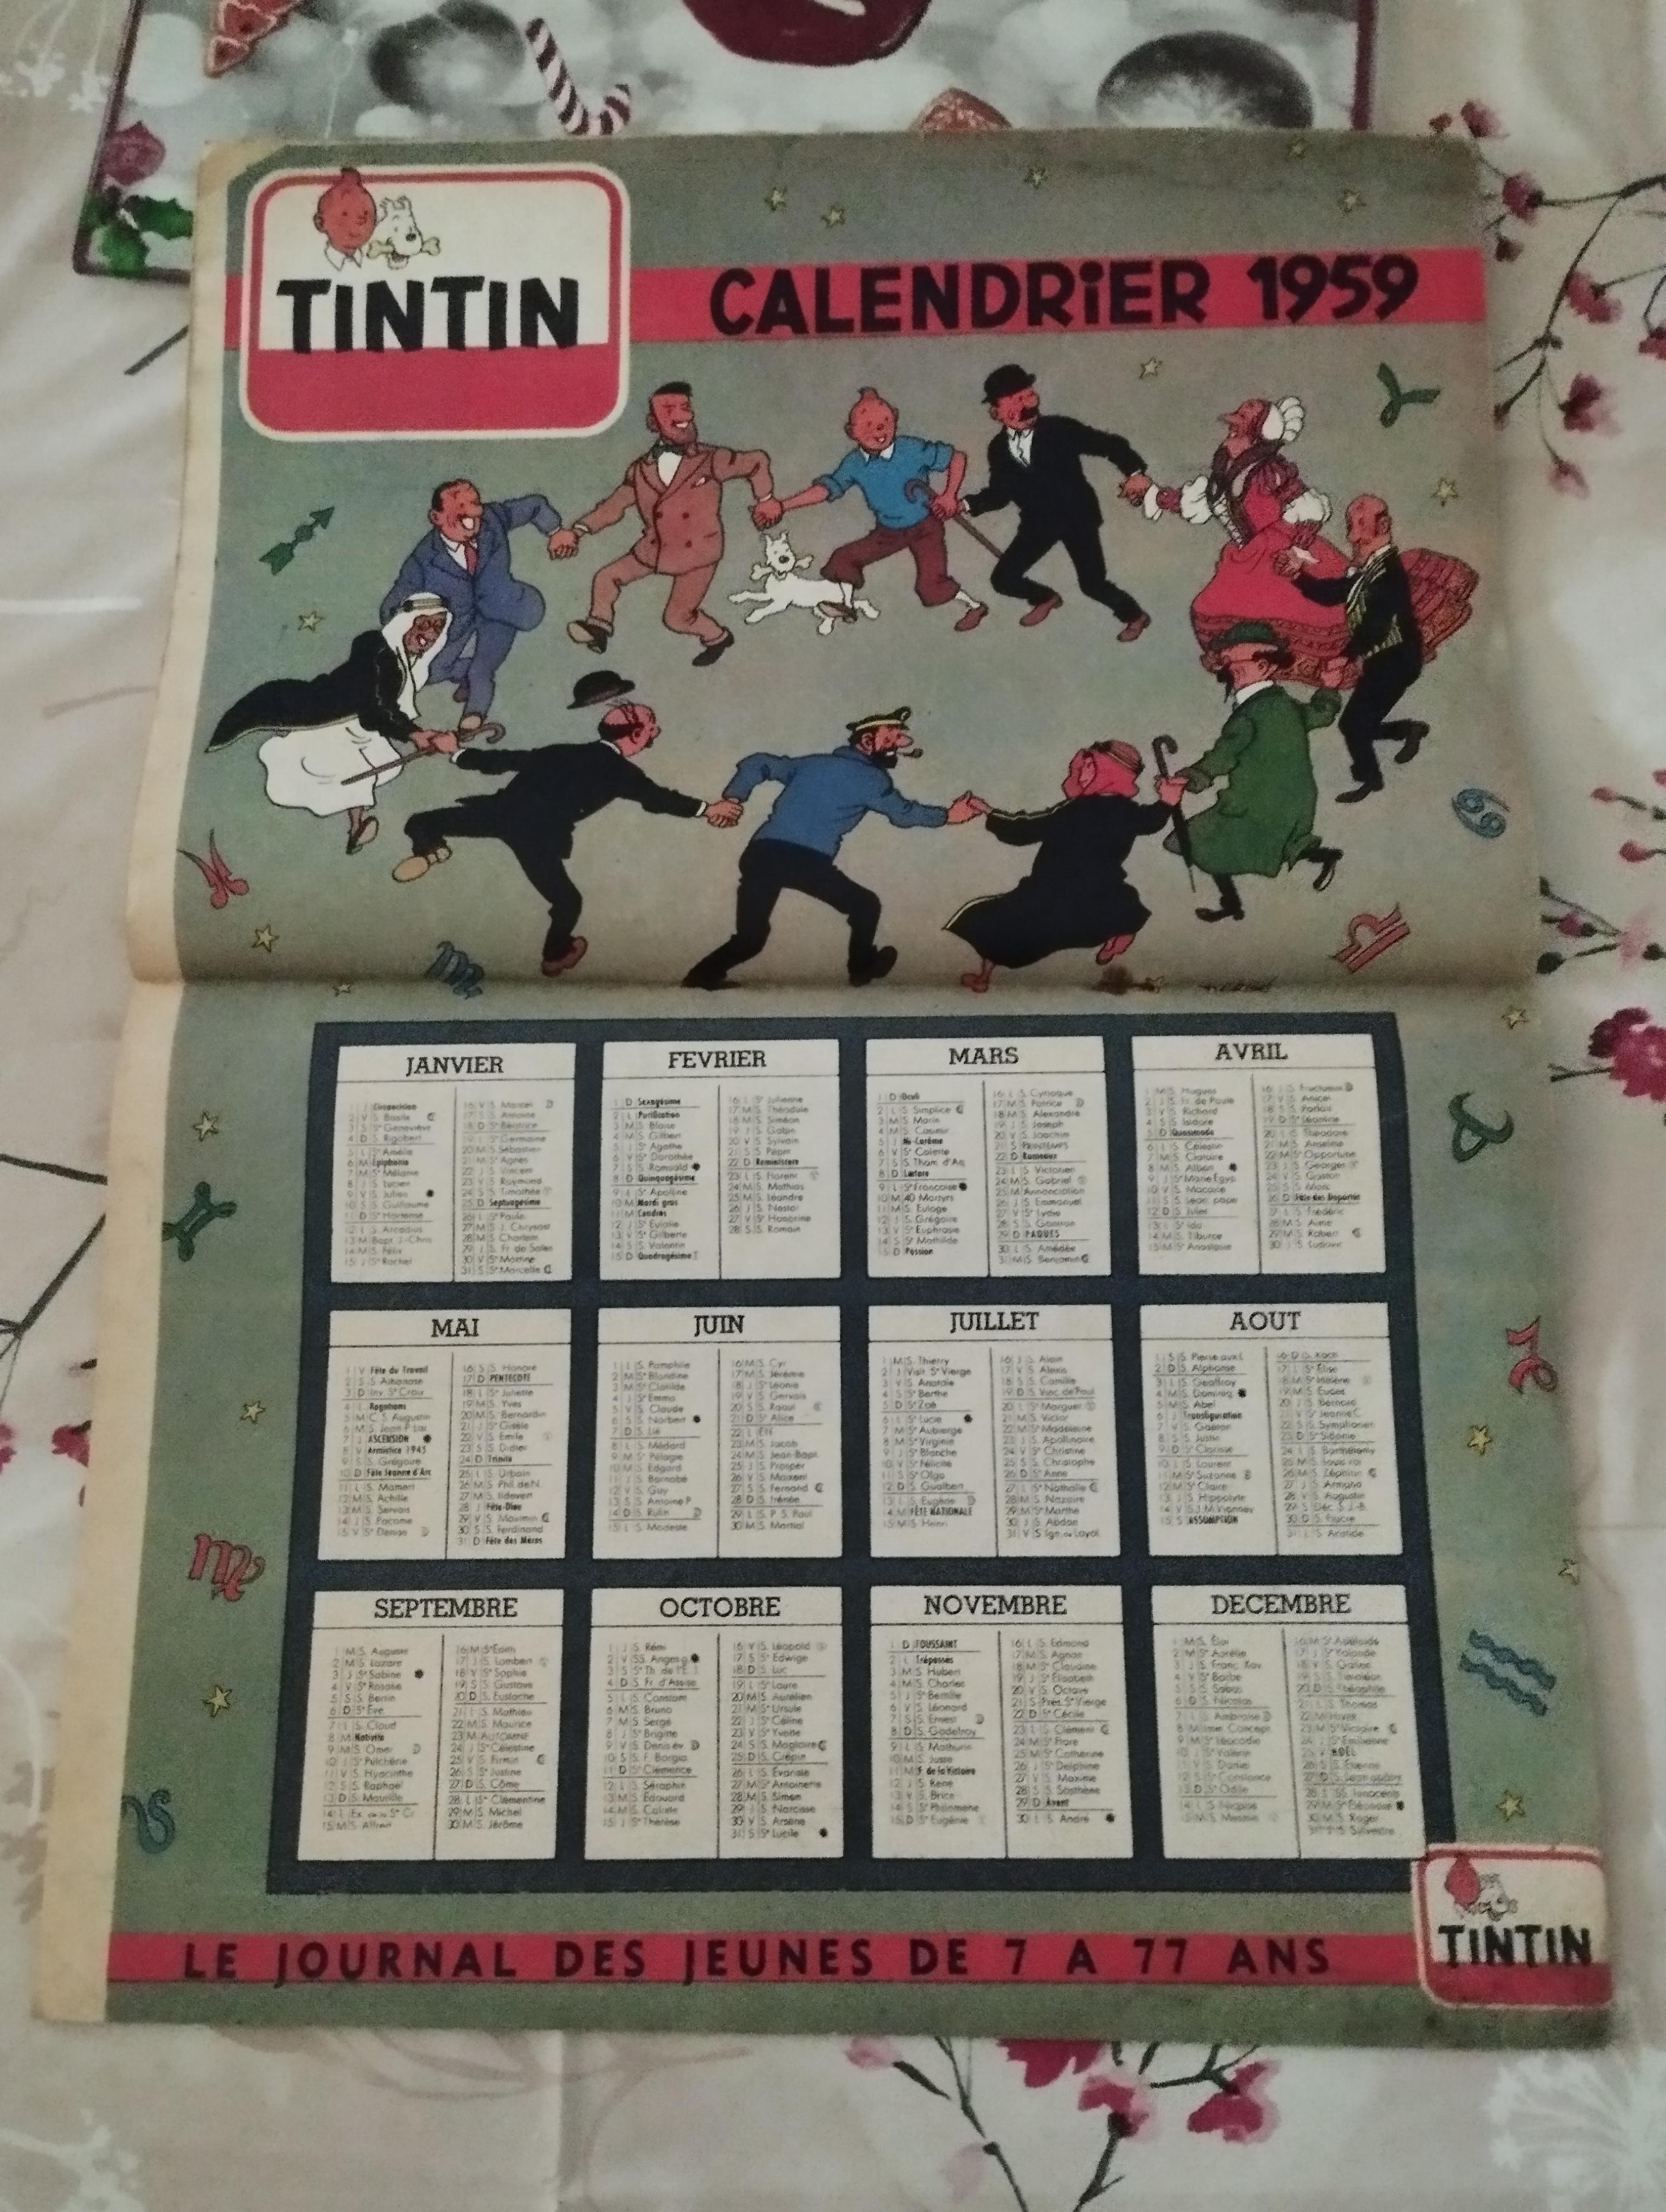 troc de troc réservé fidji rare - calendrier tintin 1959 image 0